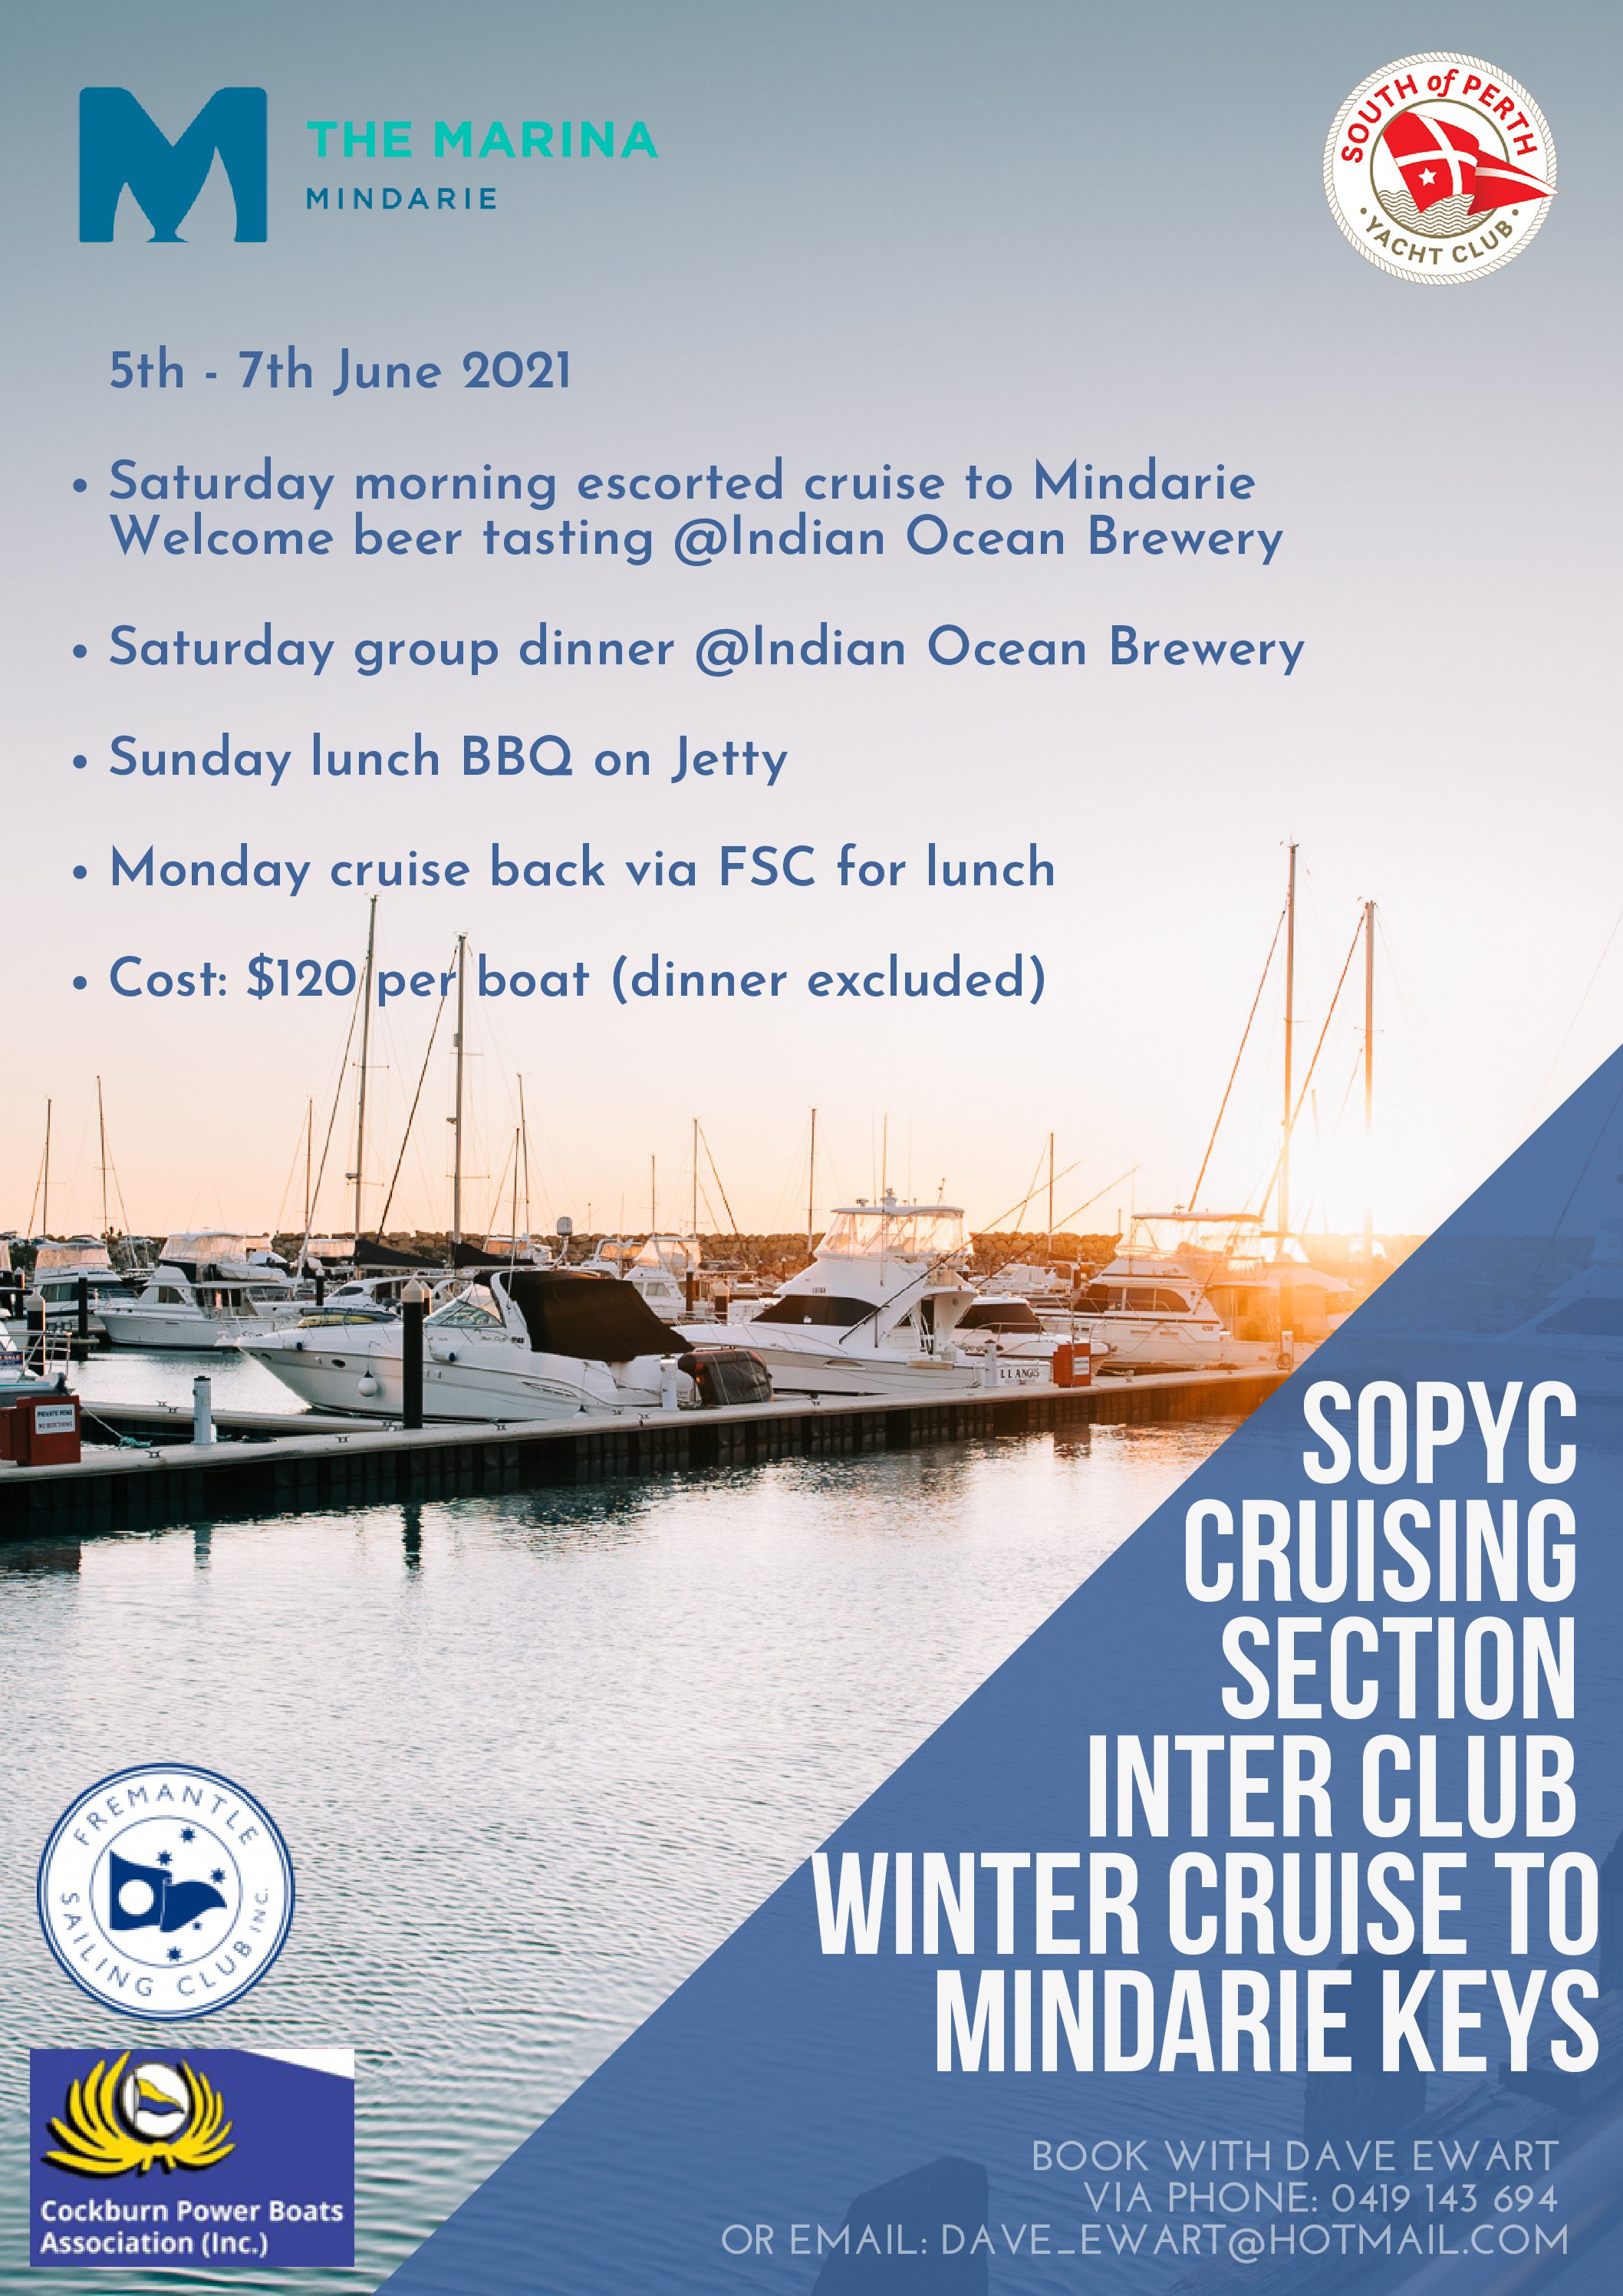 Cruising Section - Inter Club Winter Cruise to Mindarie Keys